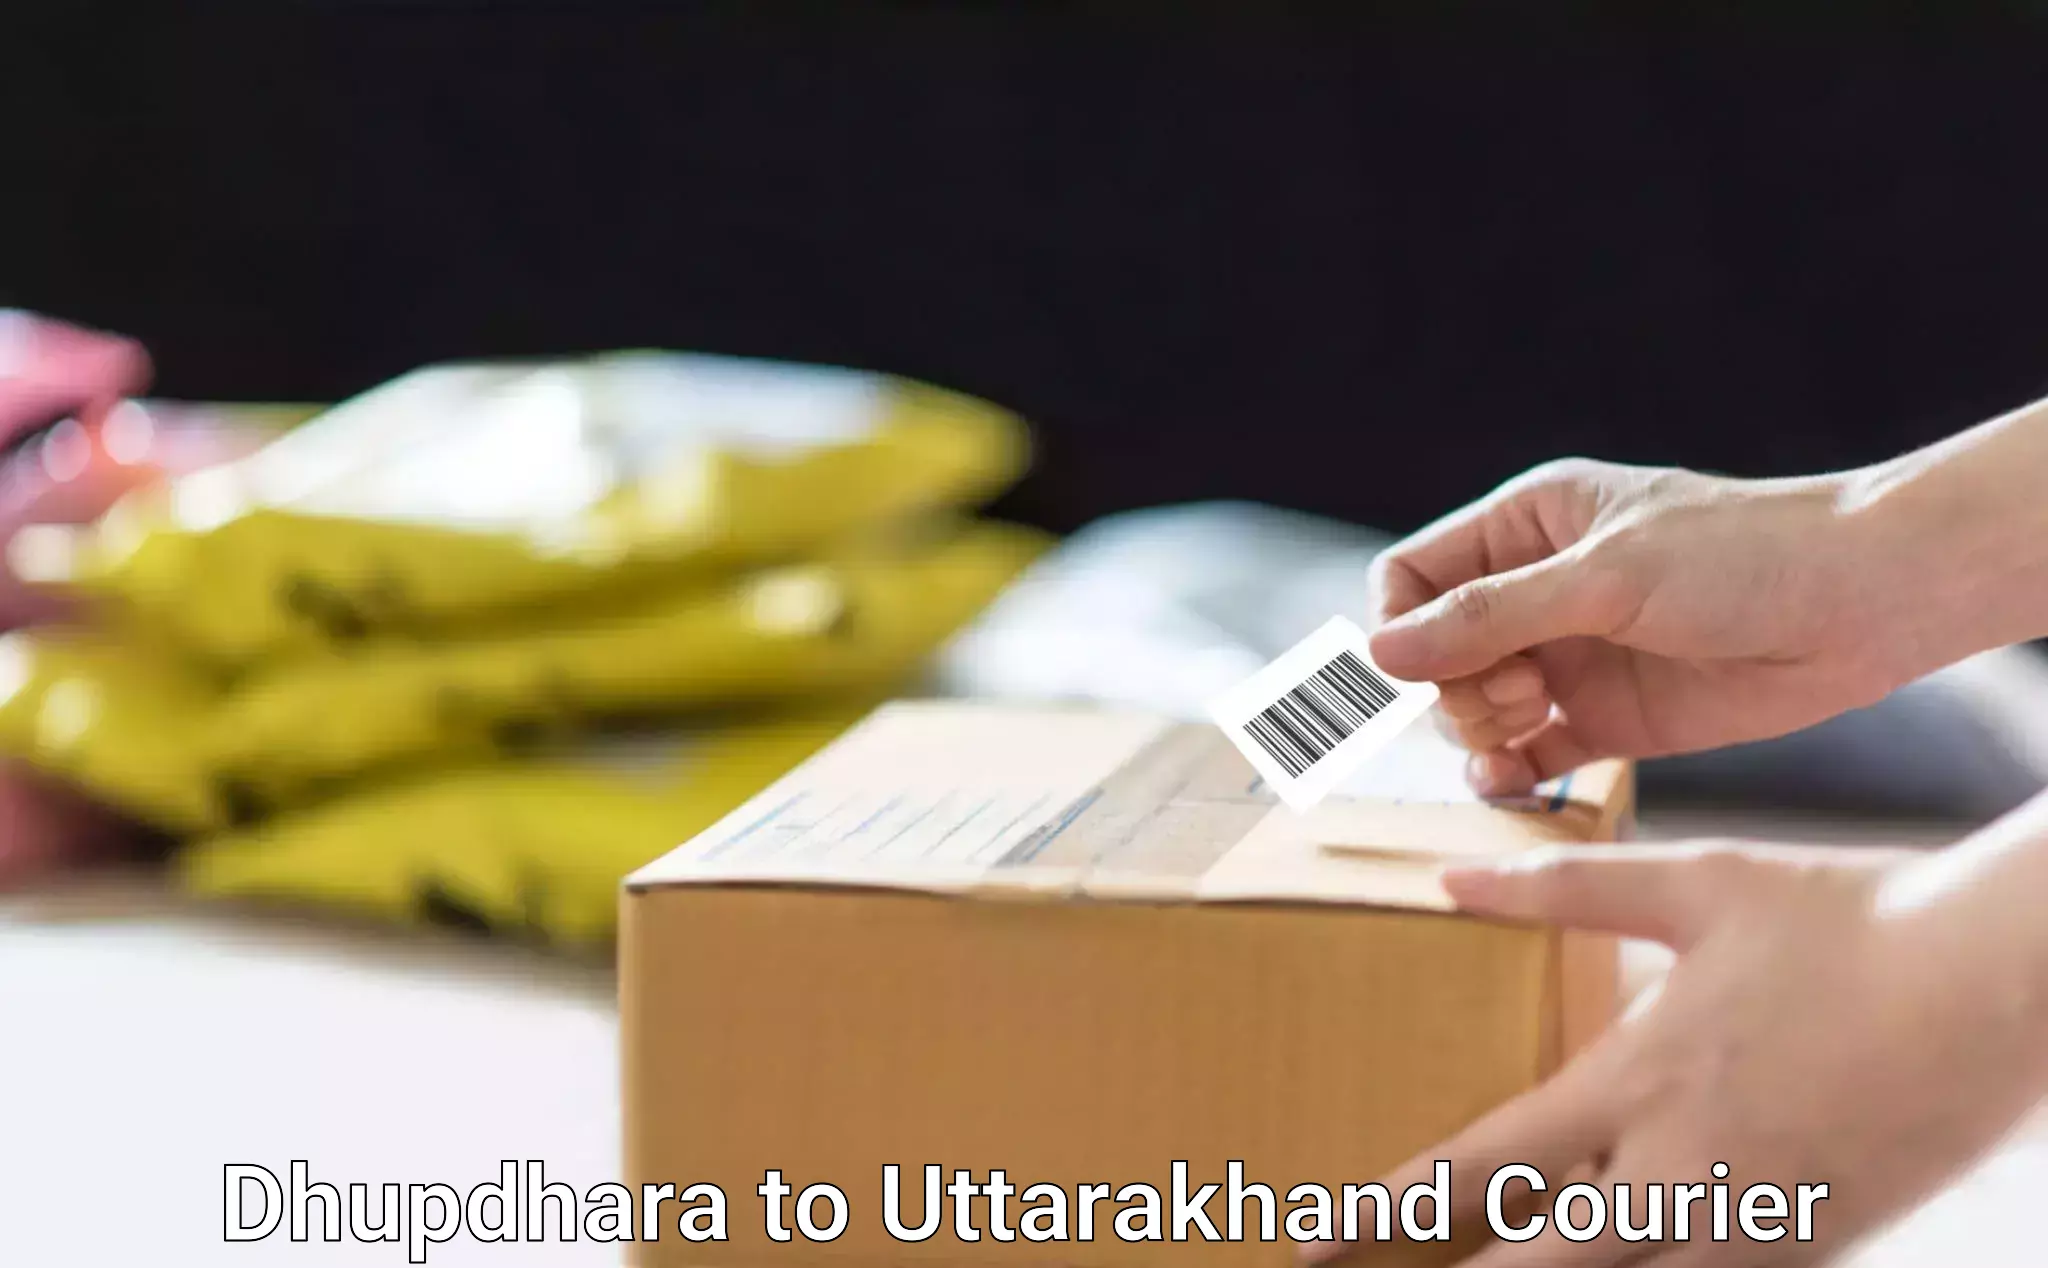 Global delivery options Dhupdhara to Uttarakhand